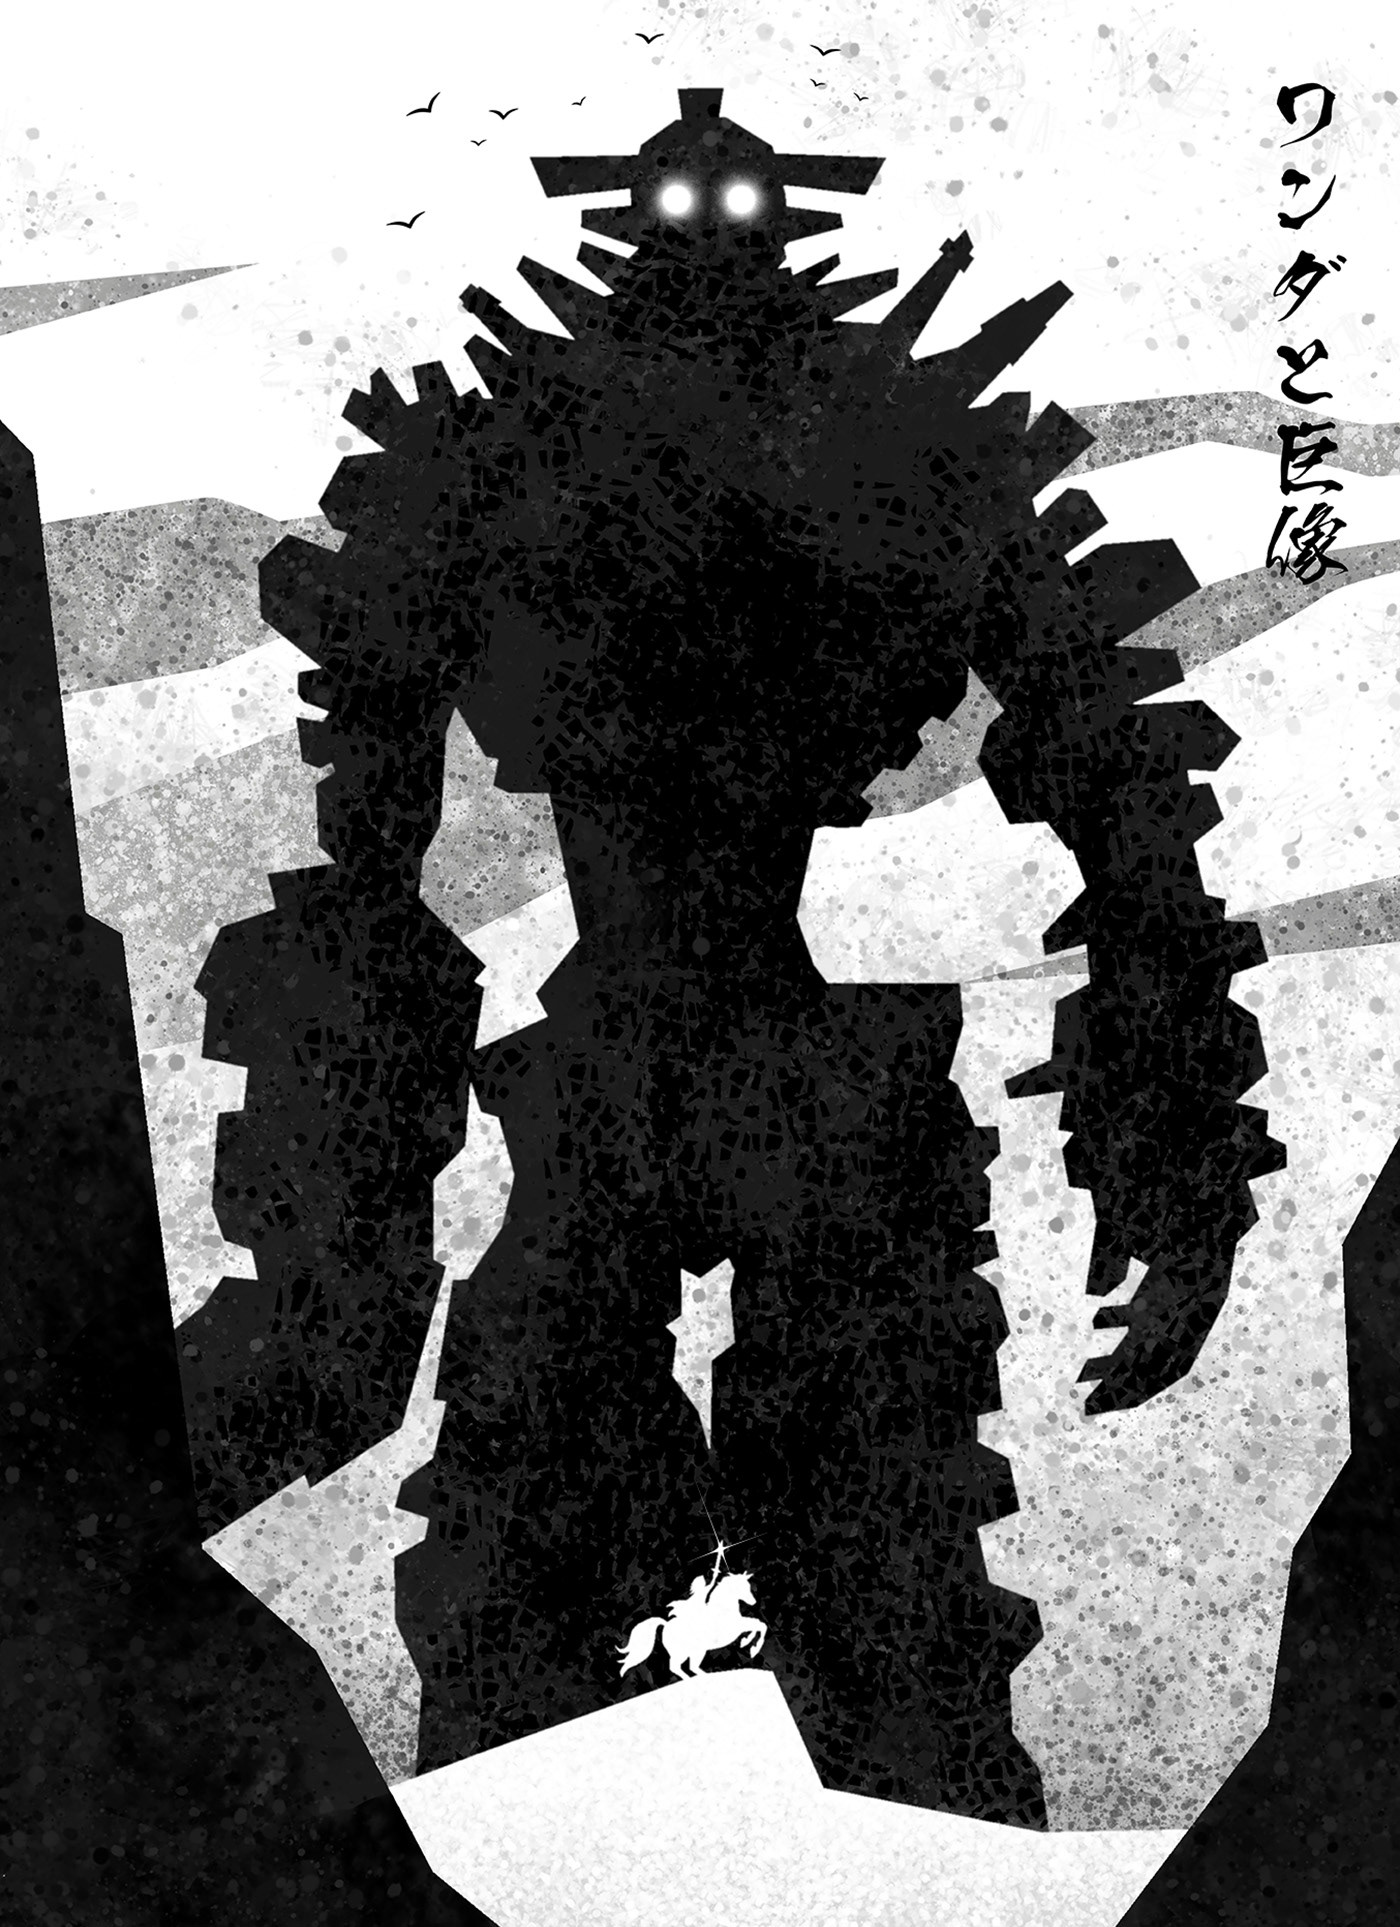 Shadow of the Colossus fanart videogame art videogame fanart Digital Art  ILLUSTRATION  Poster Design poster art poster